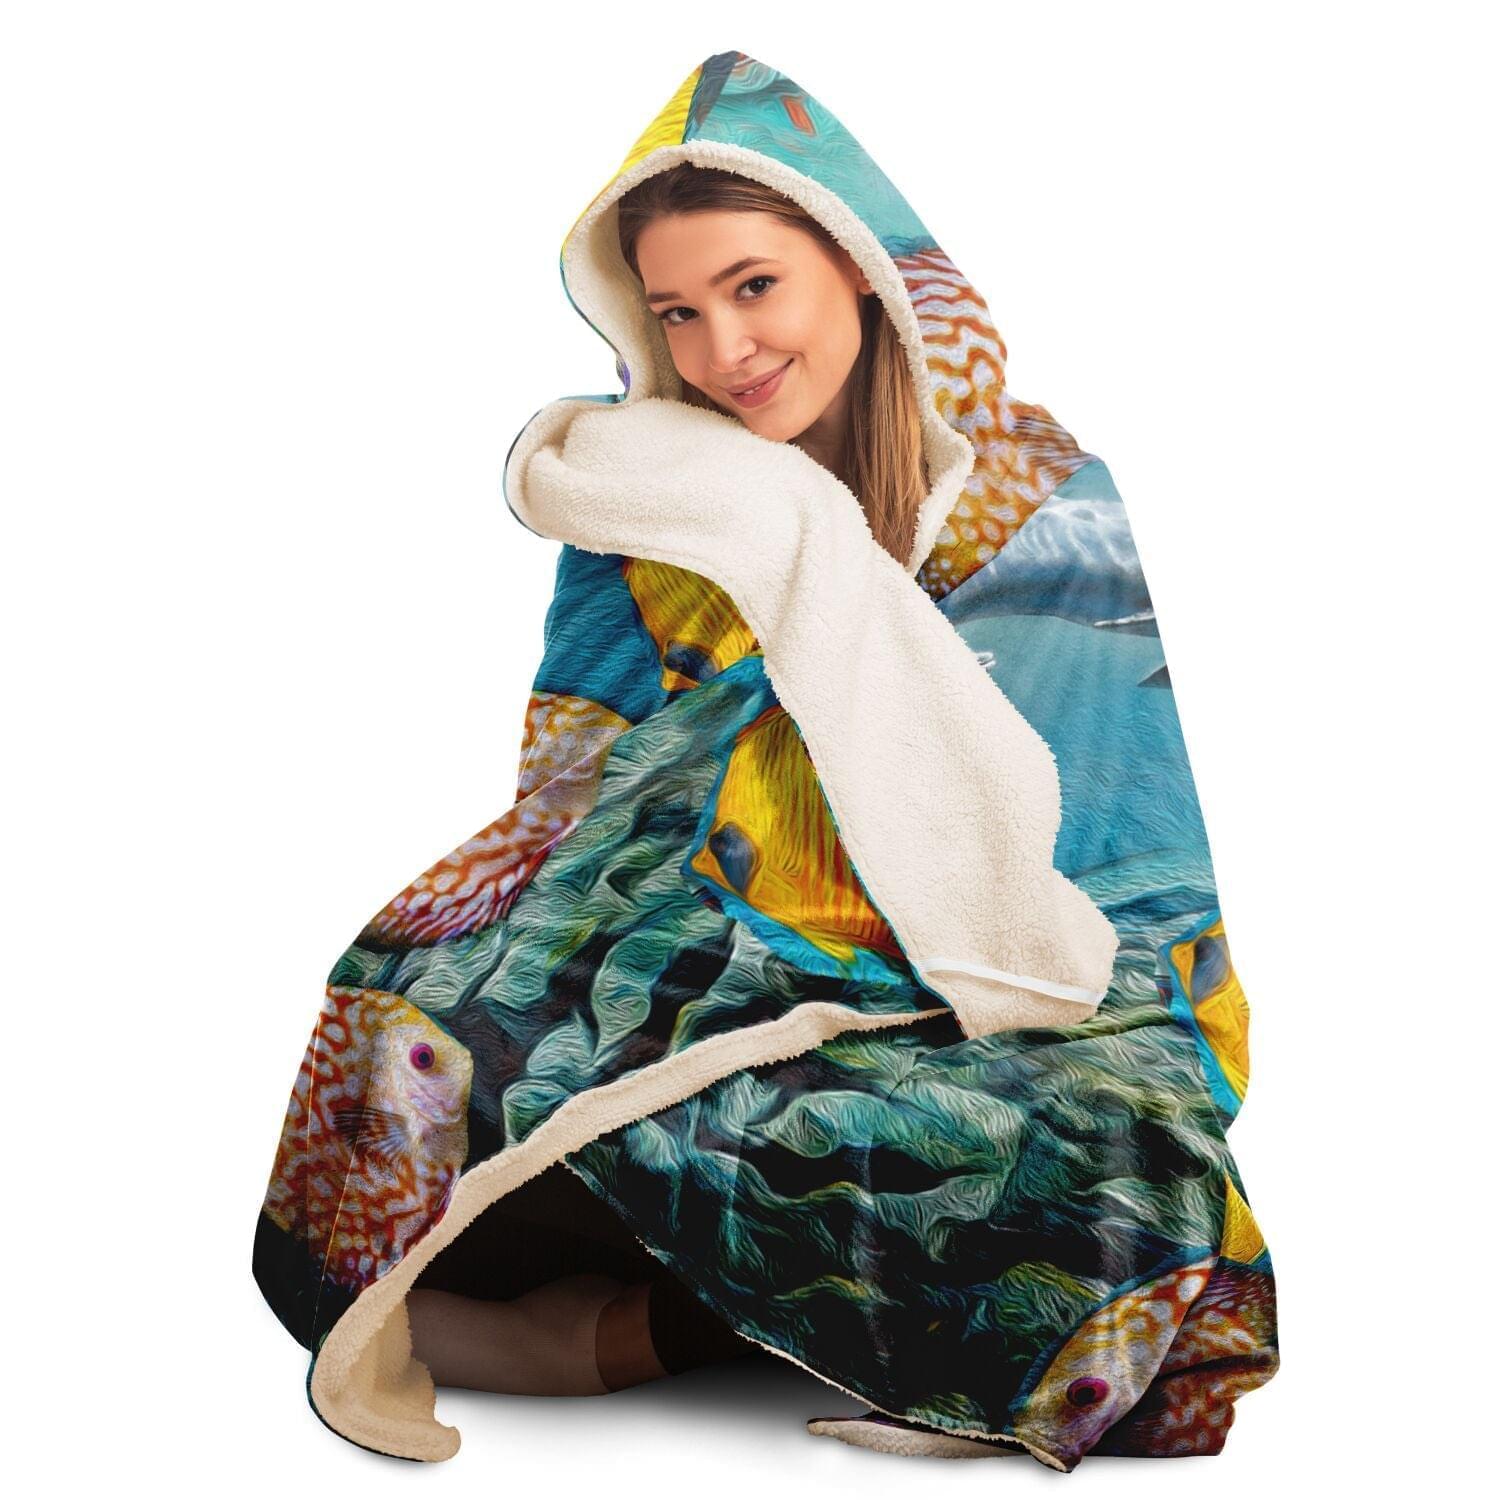 Dolphins Apparel Hooded Blanket Gift Idea HOO-DESIGN.SHOP